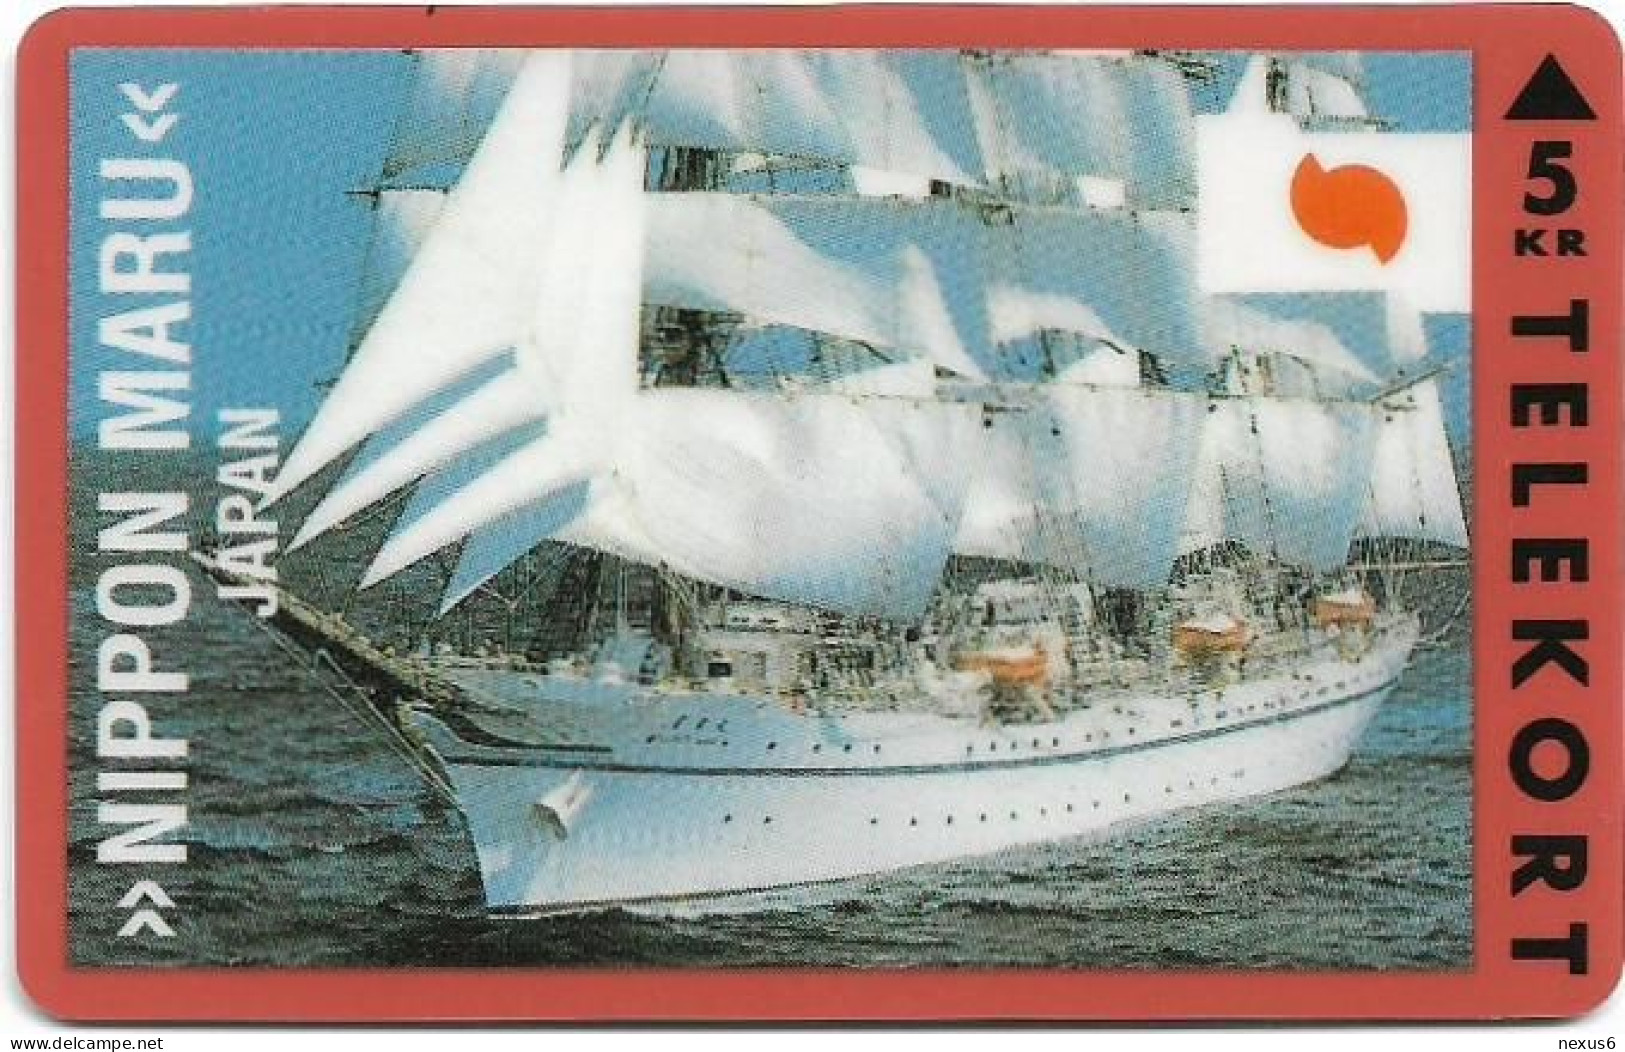 Denmark - KTAS - Ships (Red) - Japan - Nippon Maru - TDKP050 - 12.1993, 5kr, 3.500ex, Used - Denmark